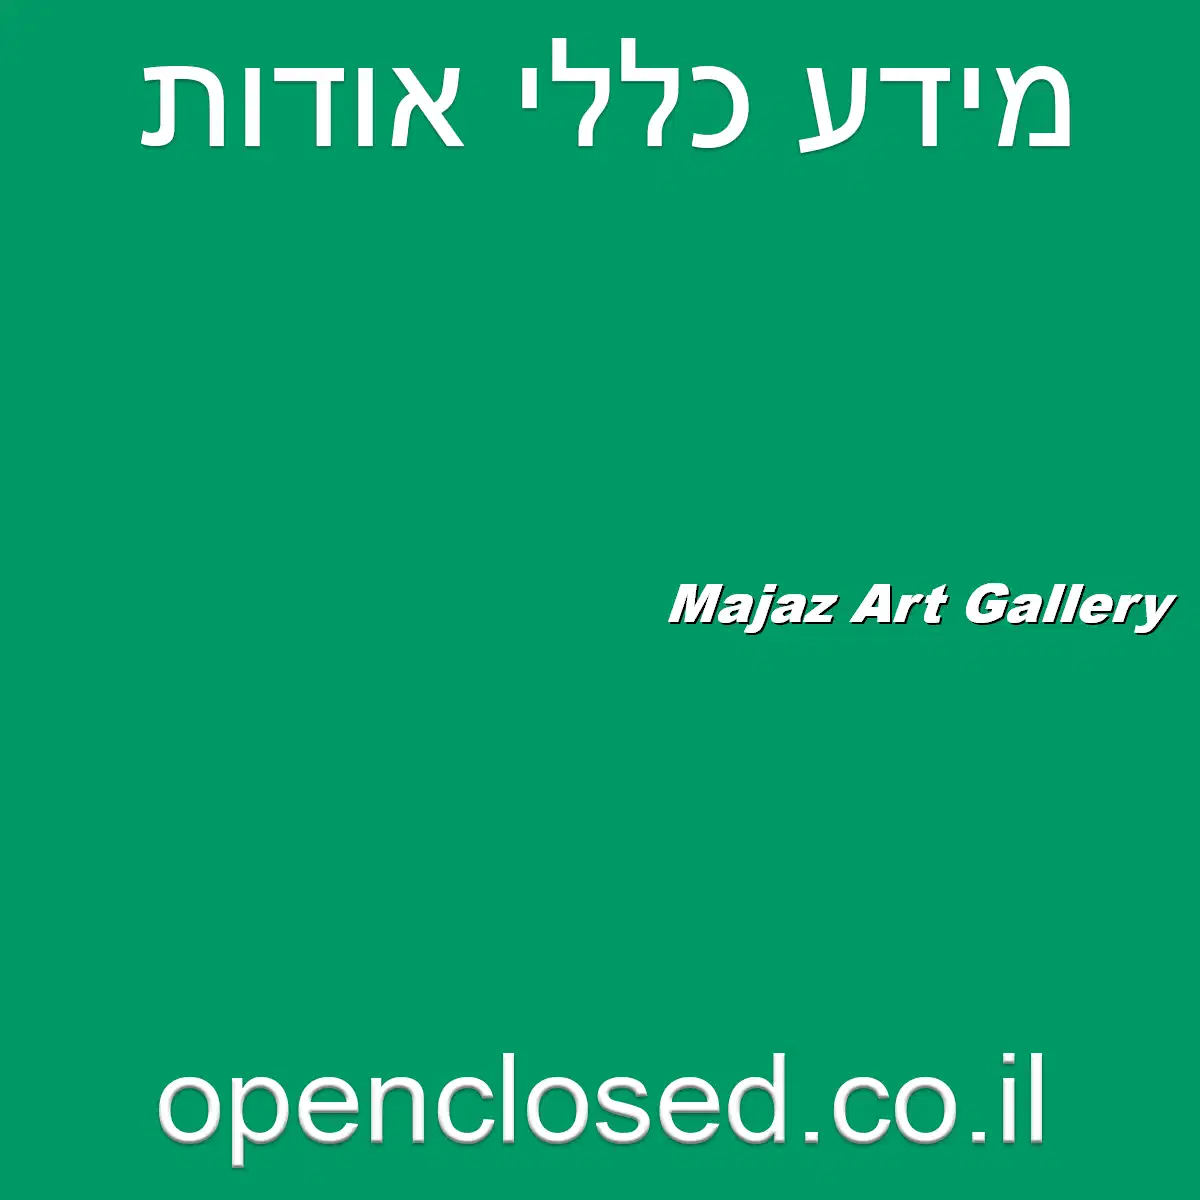 Majaz Art Gallery